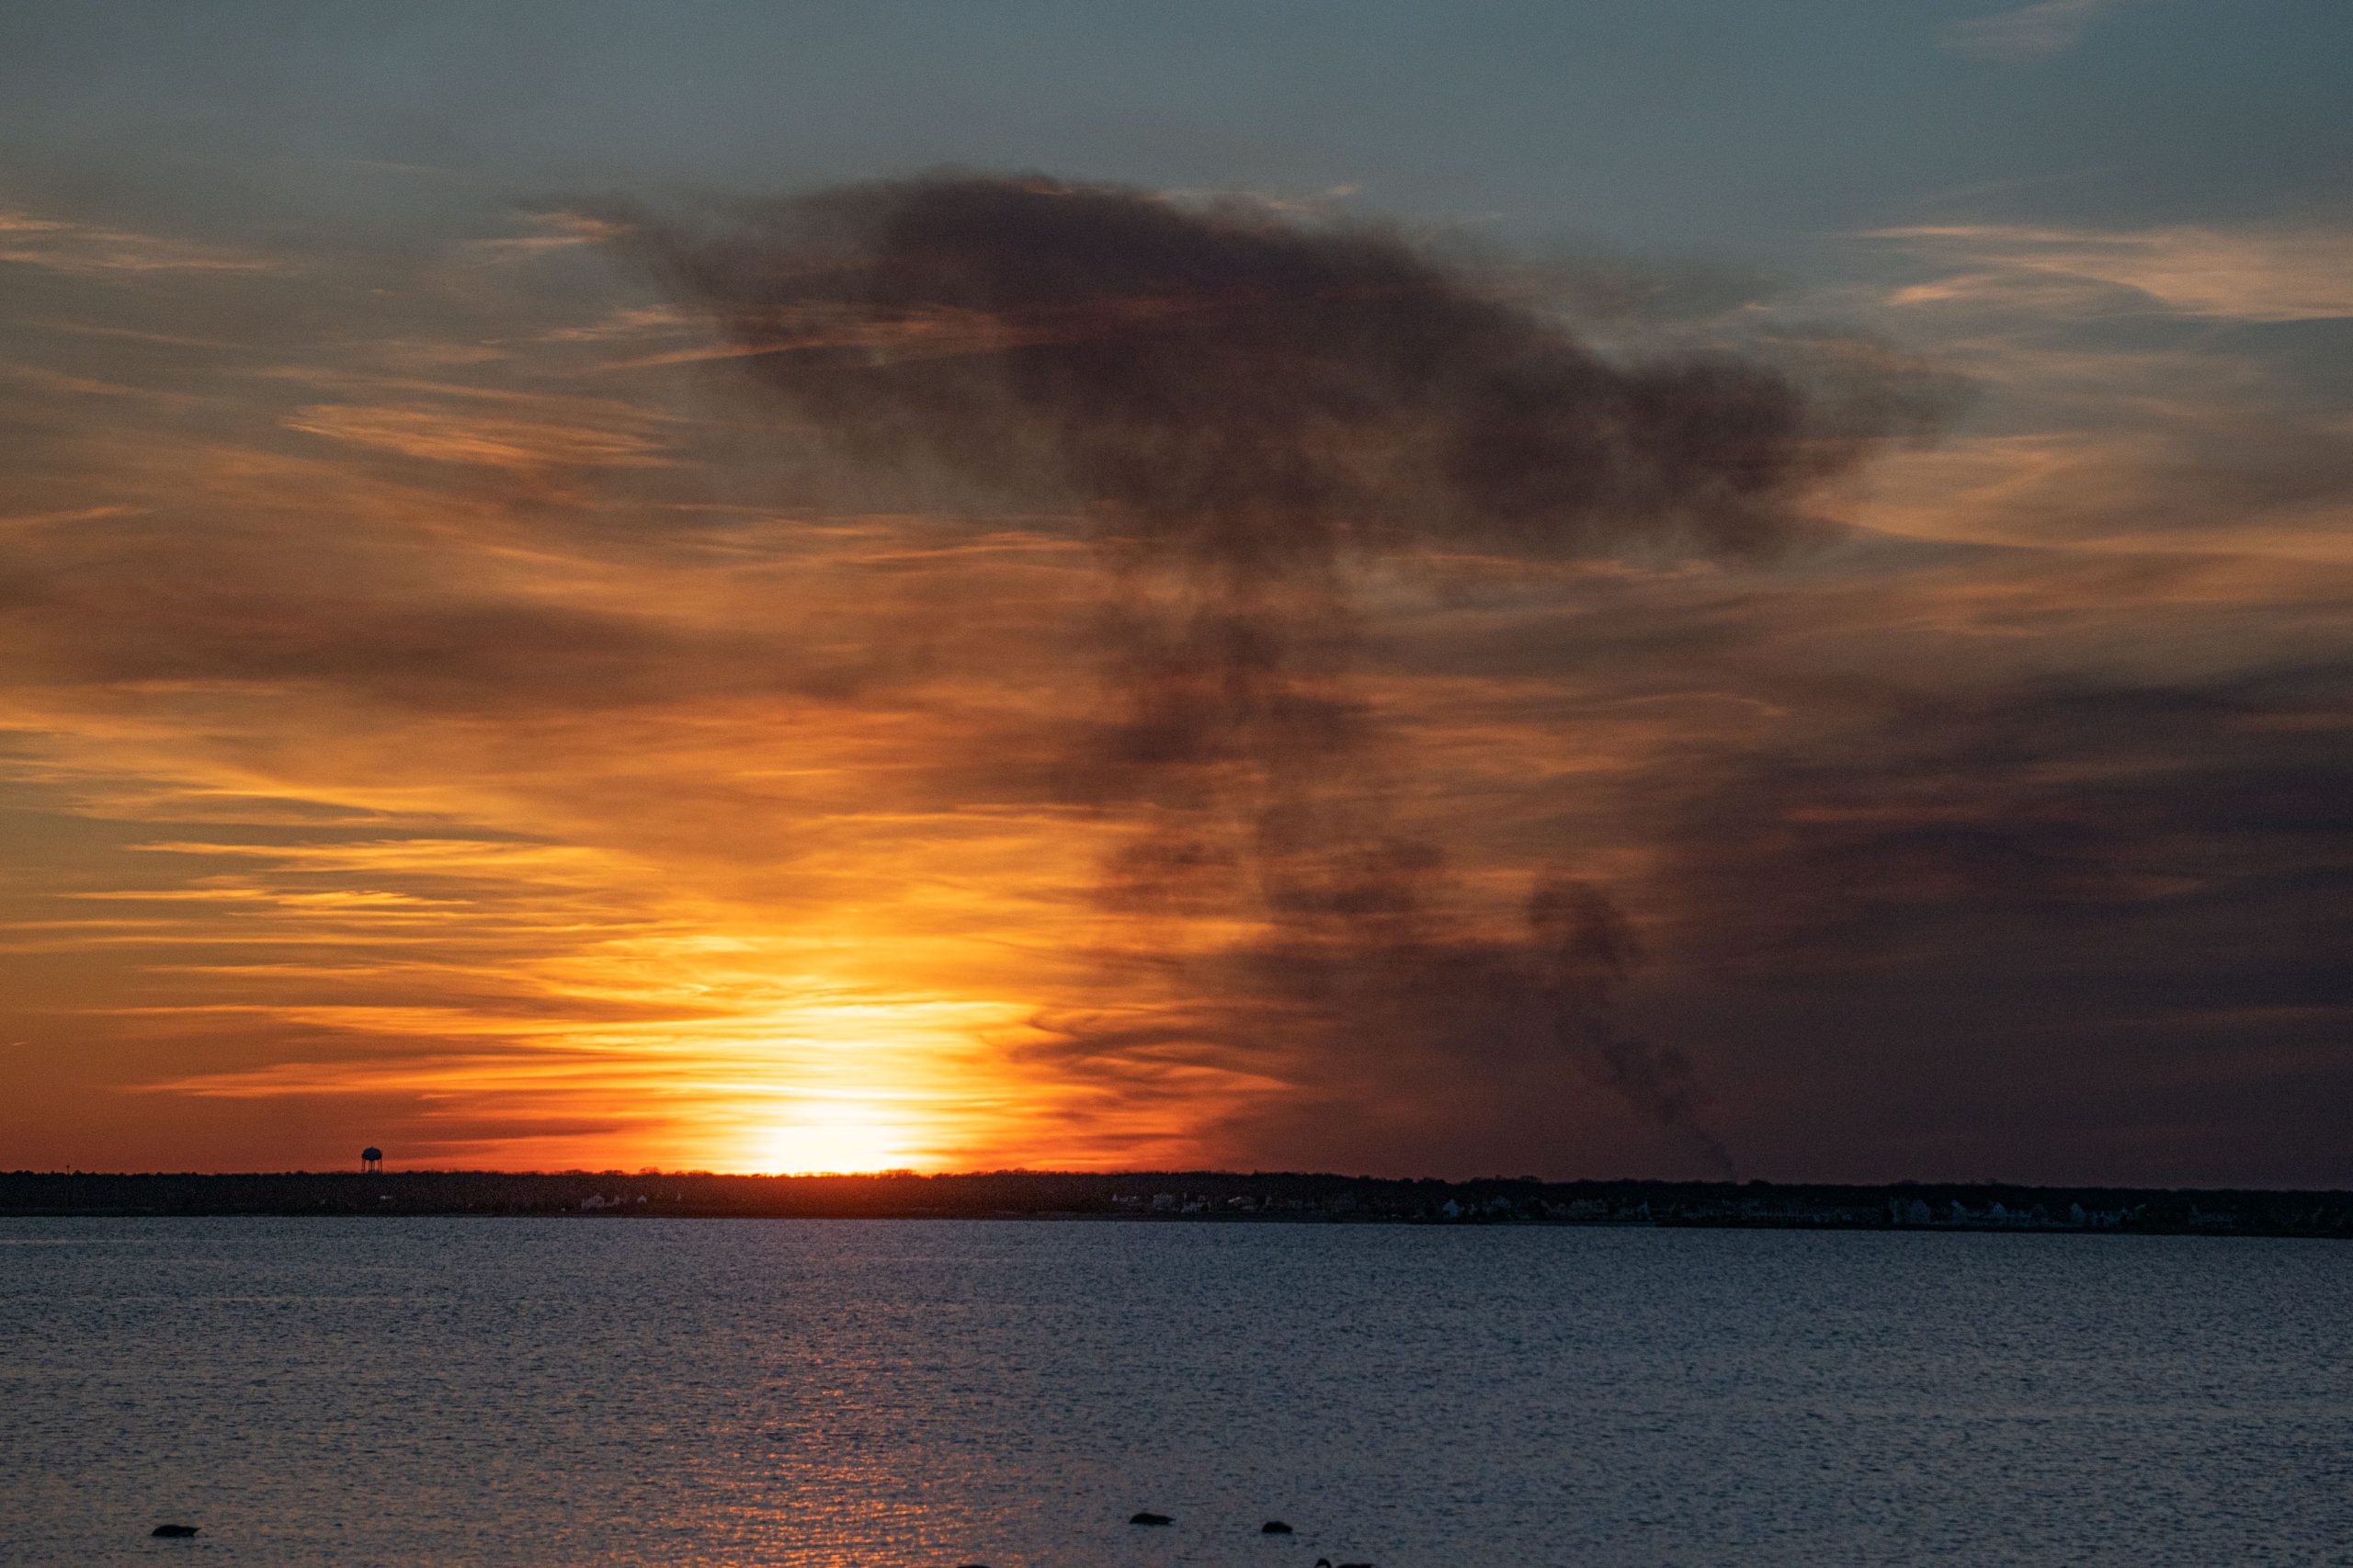 A controlled burn in Ocean County, N.J. produces a plume of smoke over Barnegat Bay, Feb. 28, 2022. (Photo: Daniel Nee)